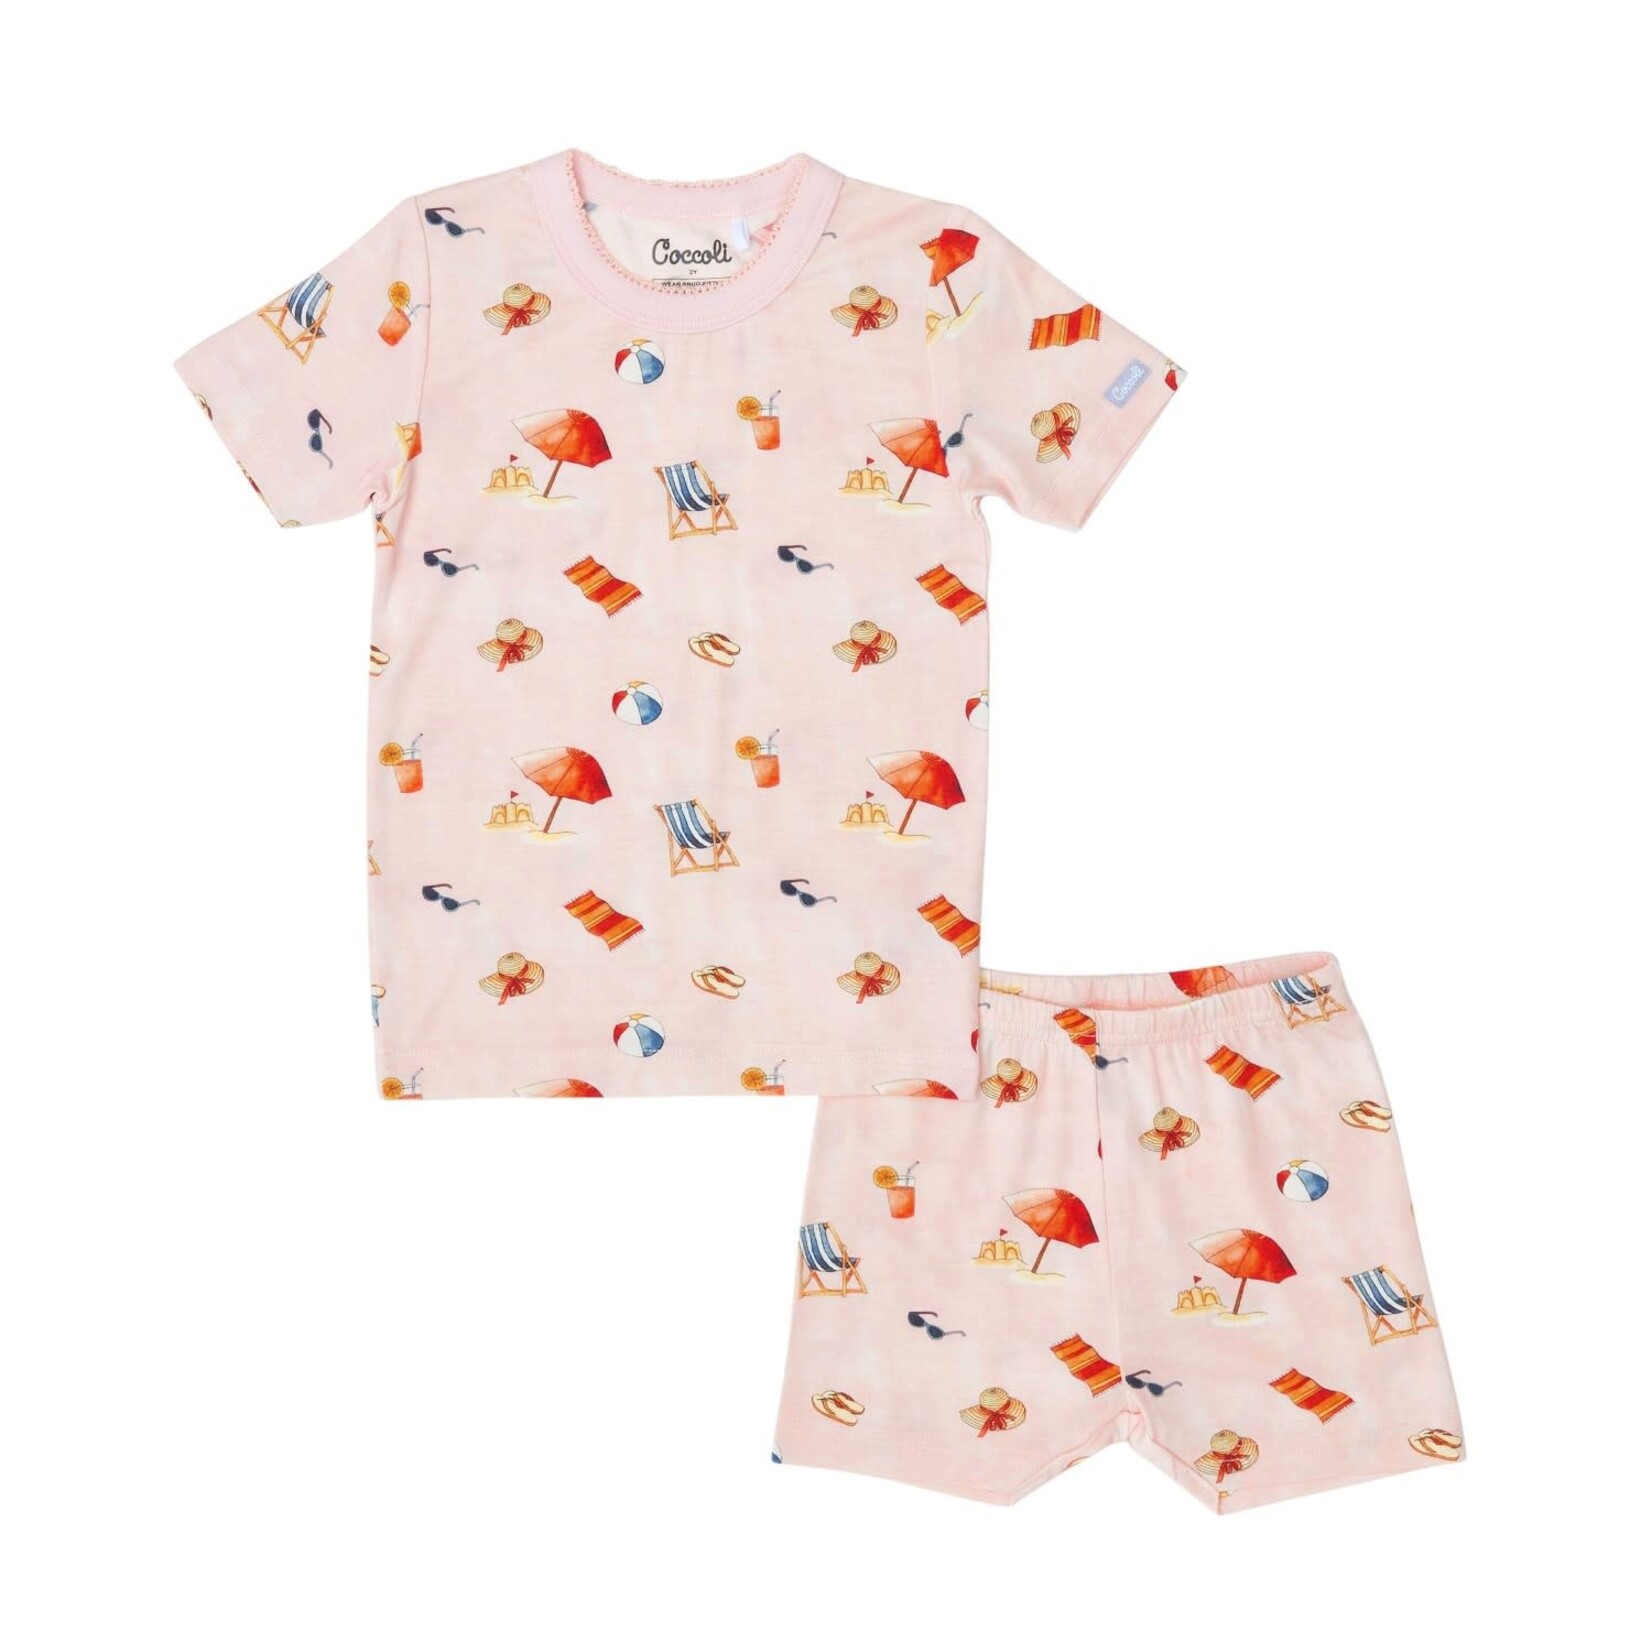 Coccoli COCCOLI - Light Pink Short Pyjamas Set with Beach Accessory Print (2 pcs.)